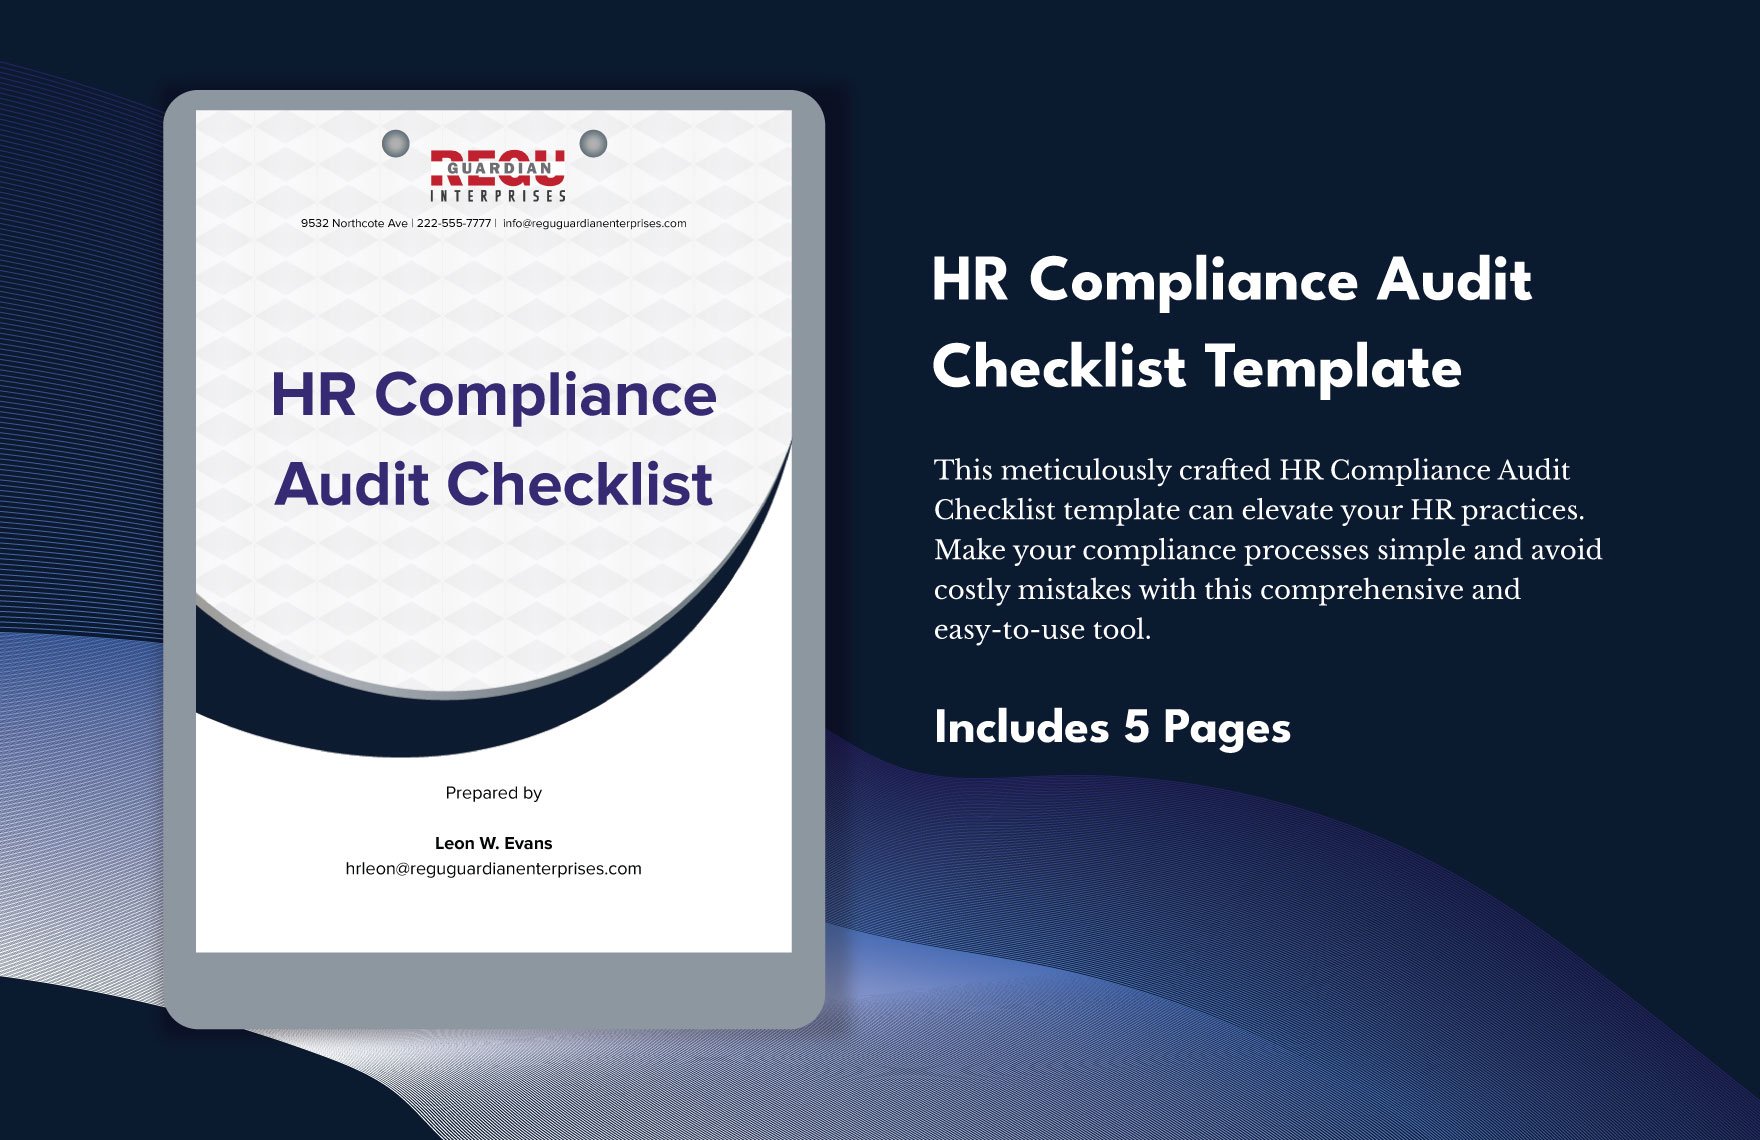 HR Compliance Audit Checklist Template